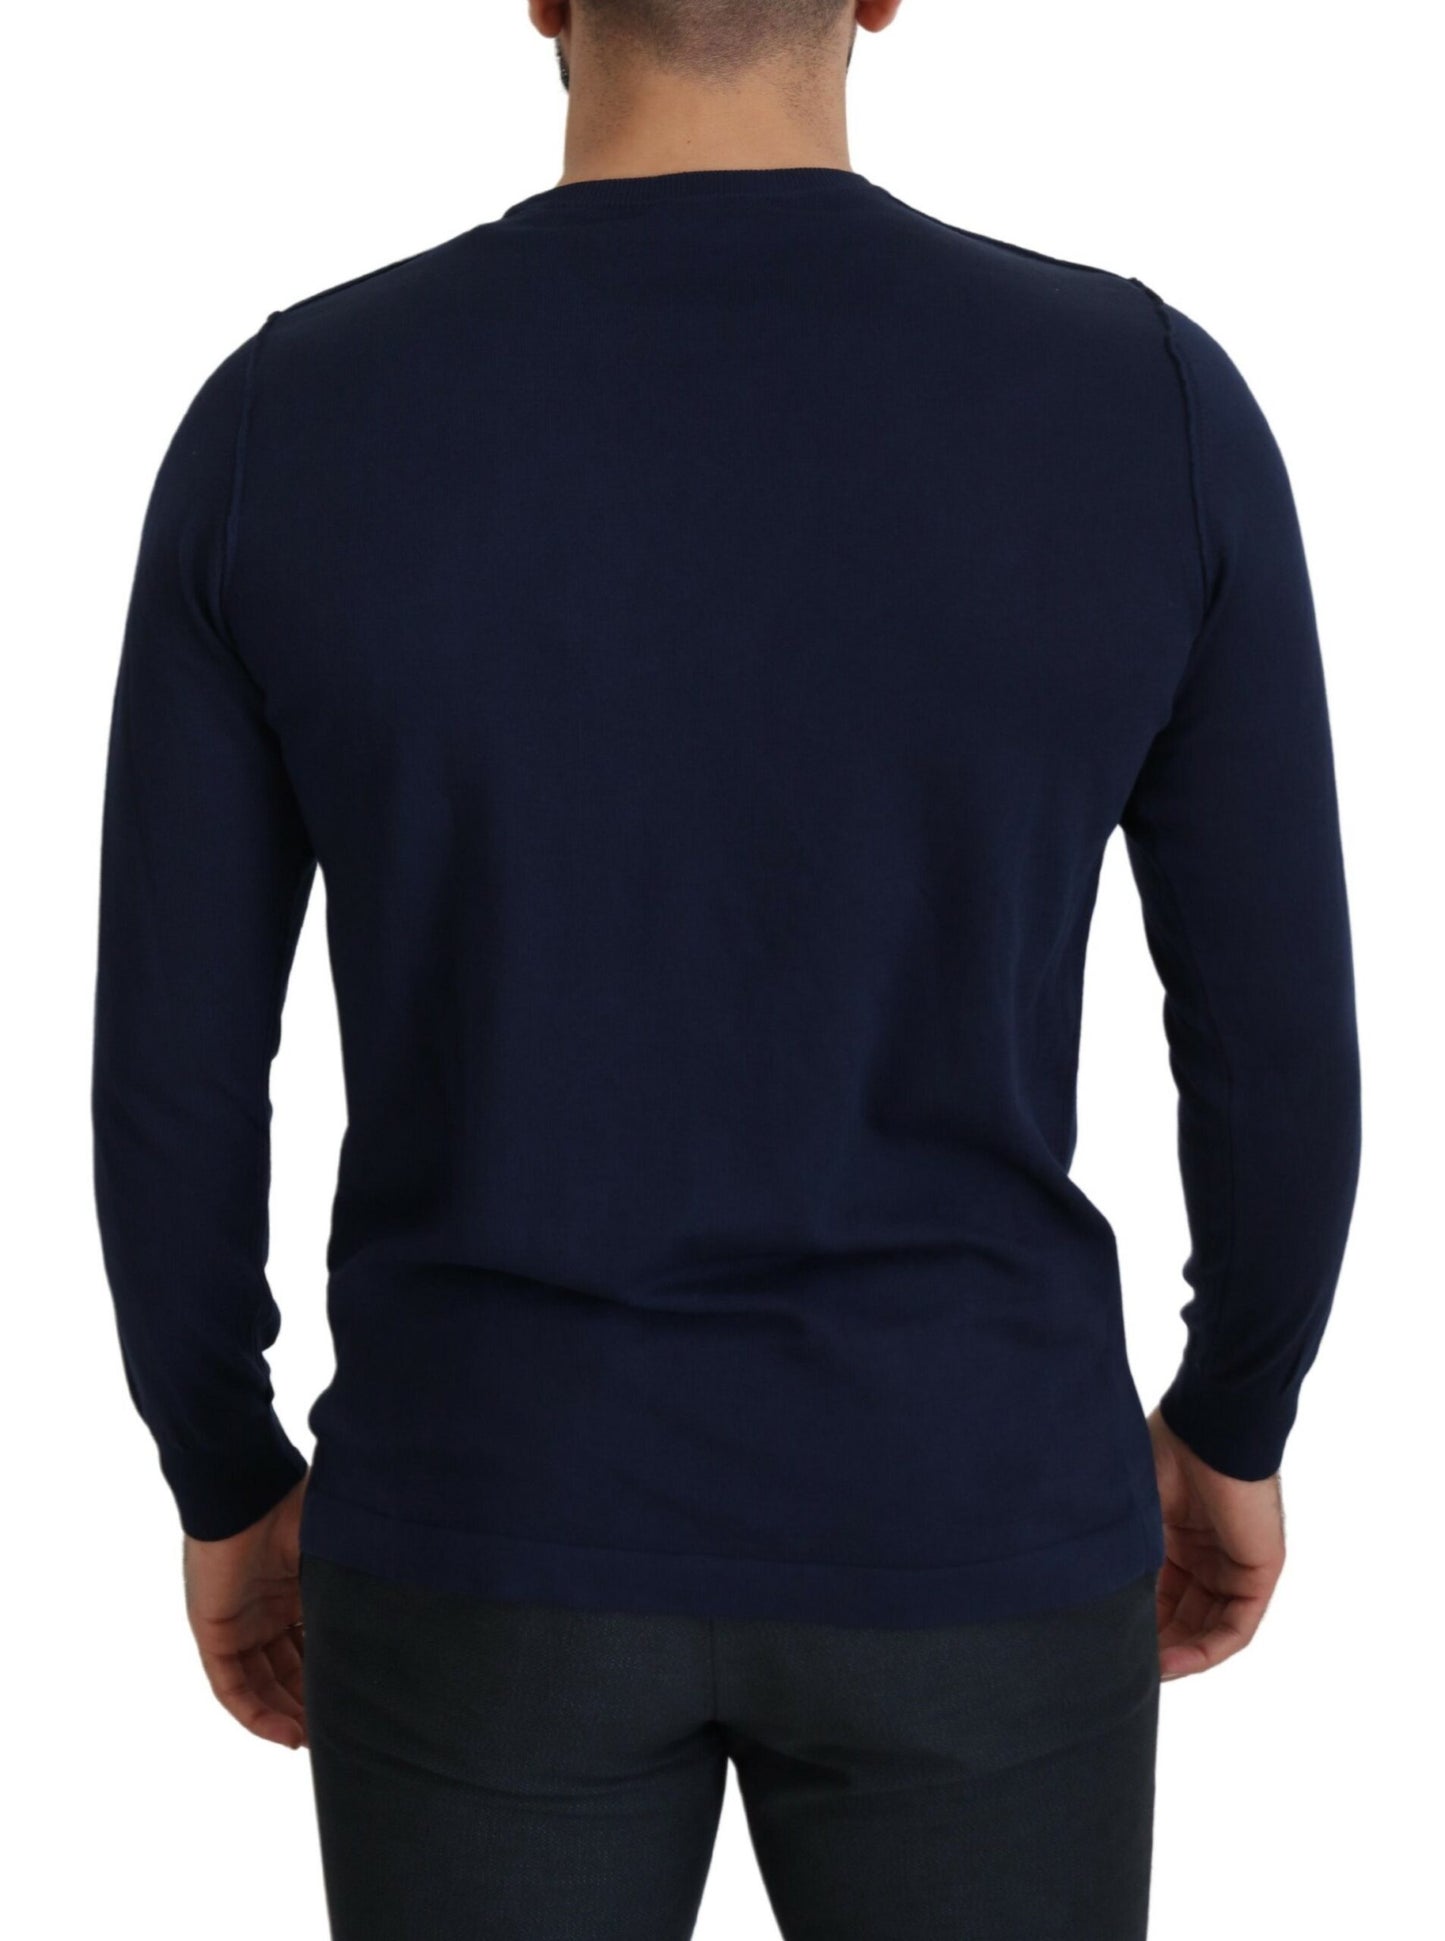 Authentic Crewneck Blue Pullover Sweater